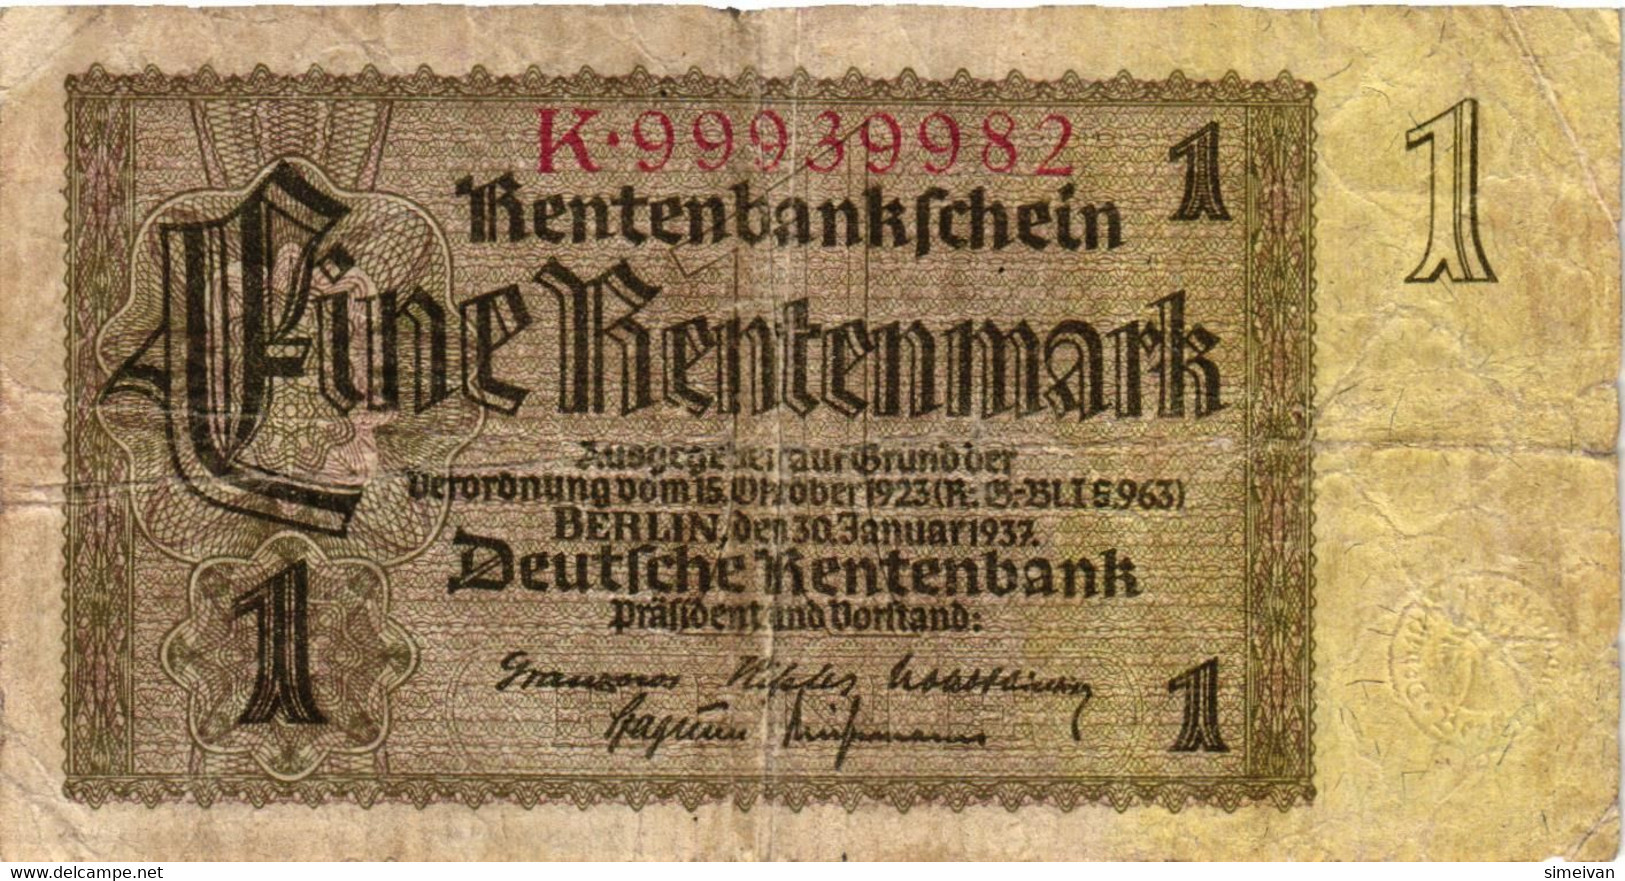 Germany 1 Rentenmark 1937 P-173b Deutschland Allemagne  #4382 - 1 Rentenmark